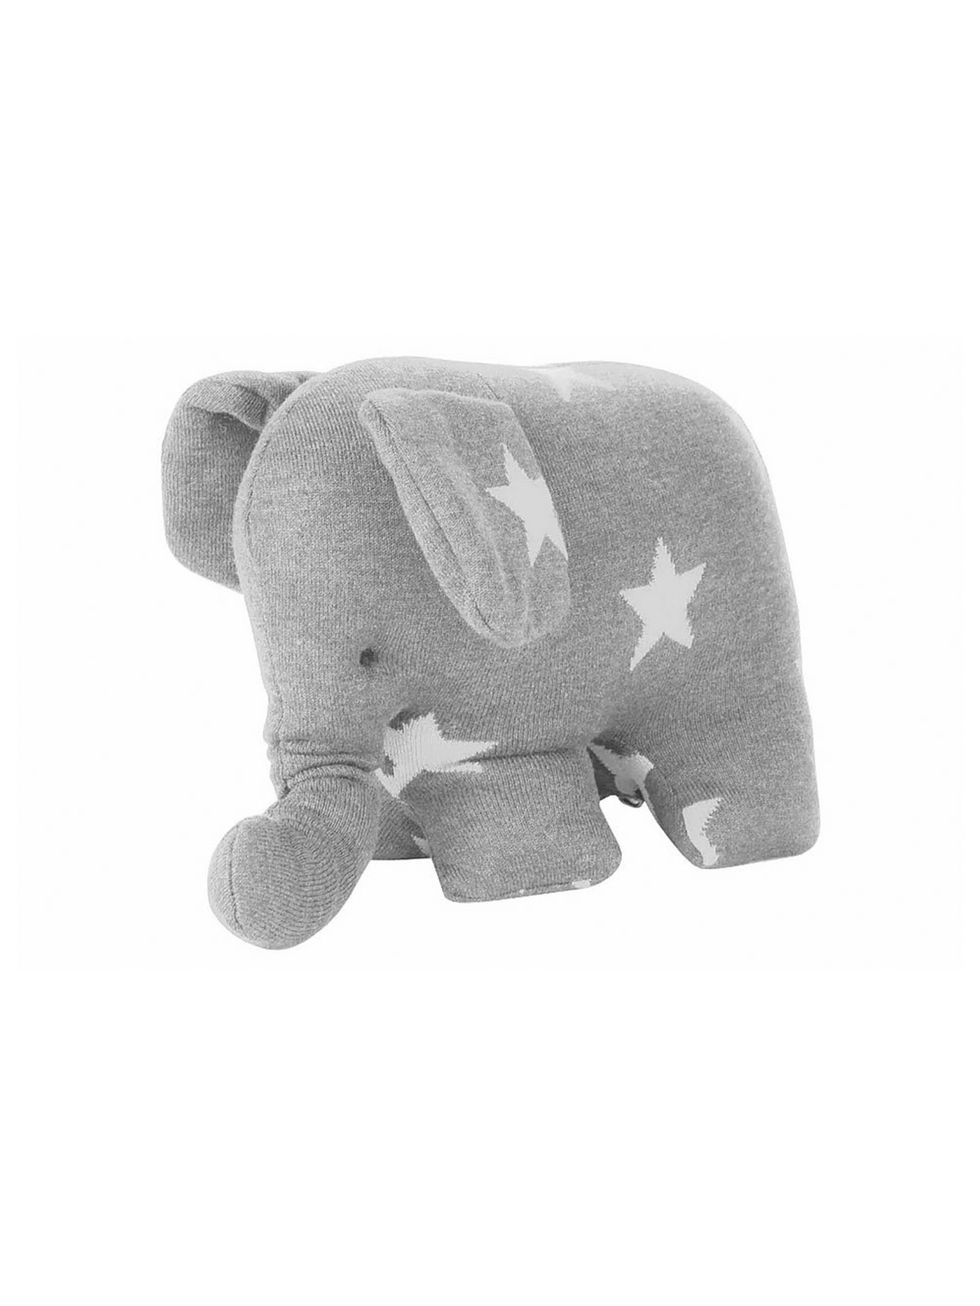 Sleeve, Elephants and Mammoths, Toy, Elephant, Terrestrial animal, Grey, Animal figure, Stuffed toy, Indian elephant, African elephant, 